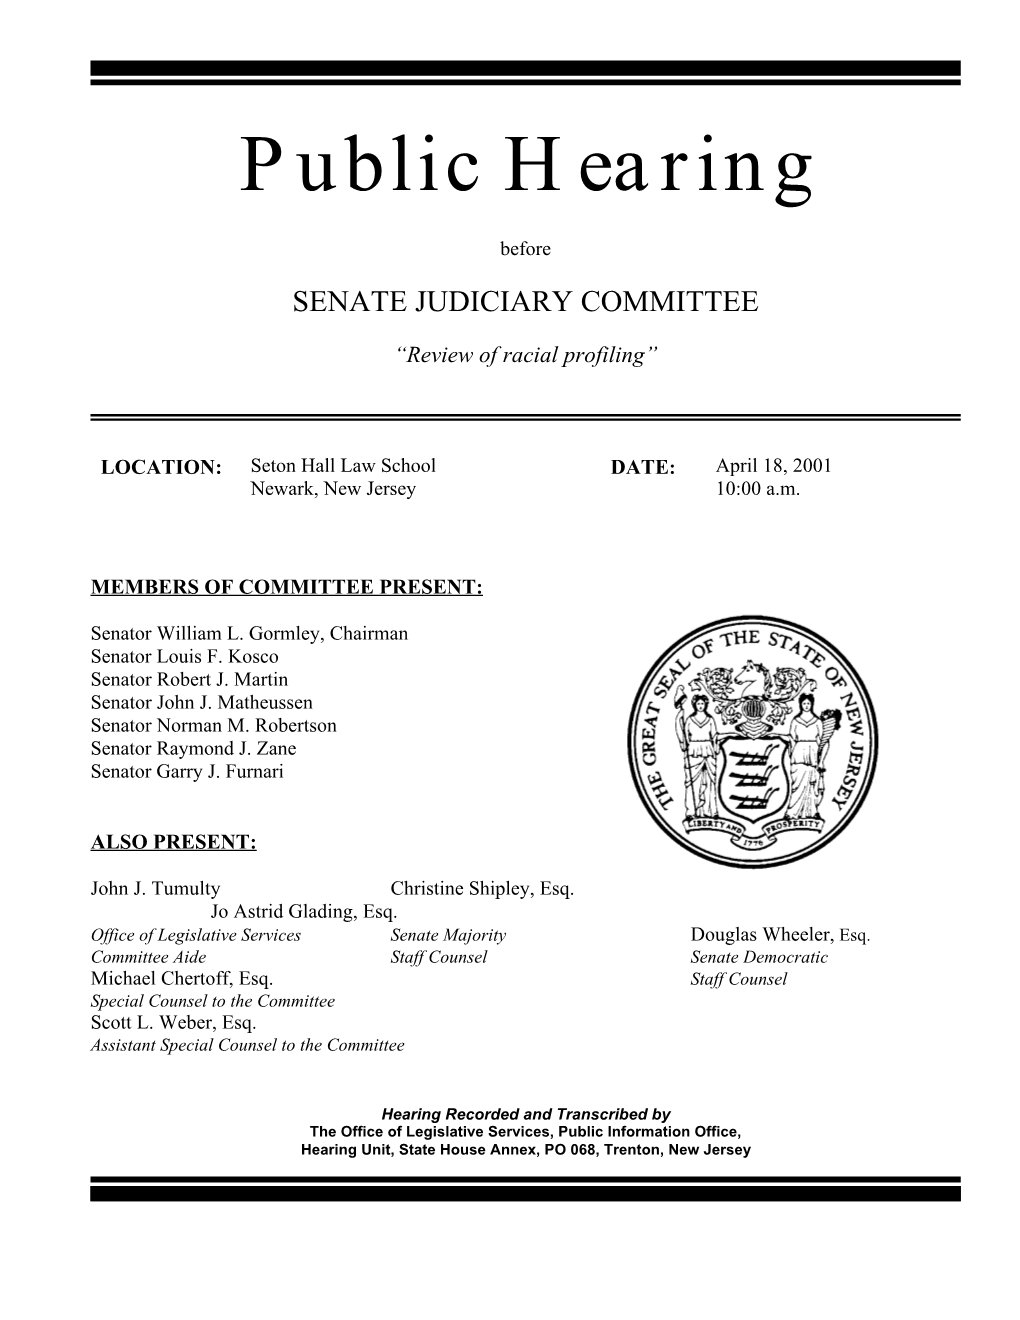 Senate Judiciary Committee Hearing on Racial Profiling 04-18-01